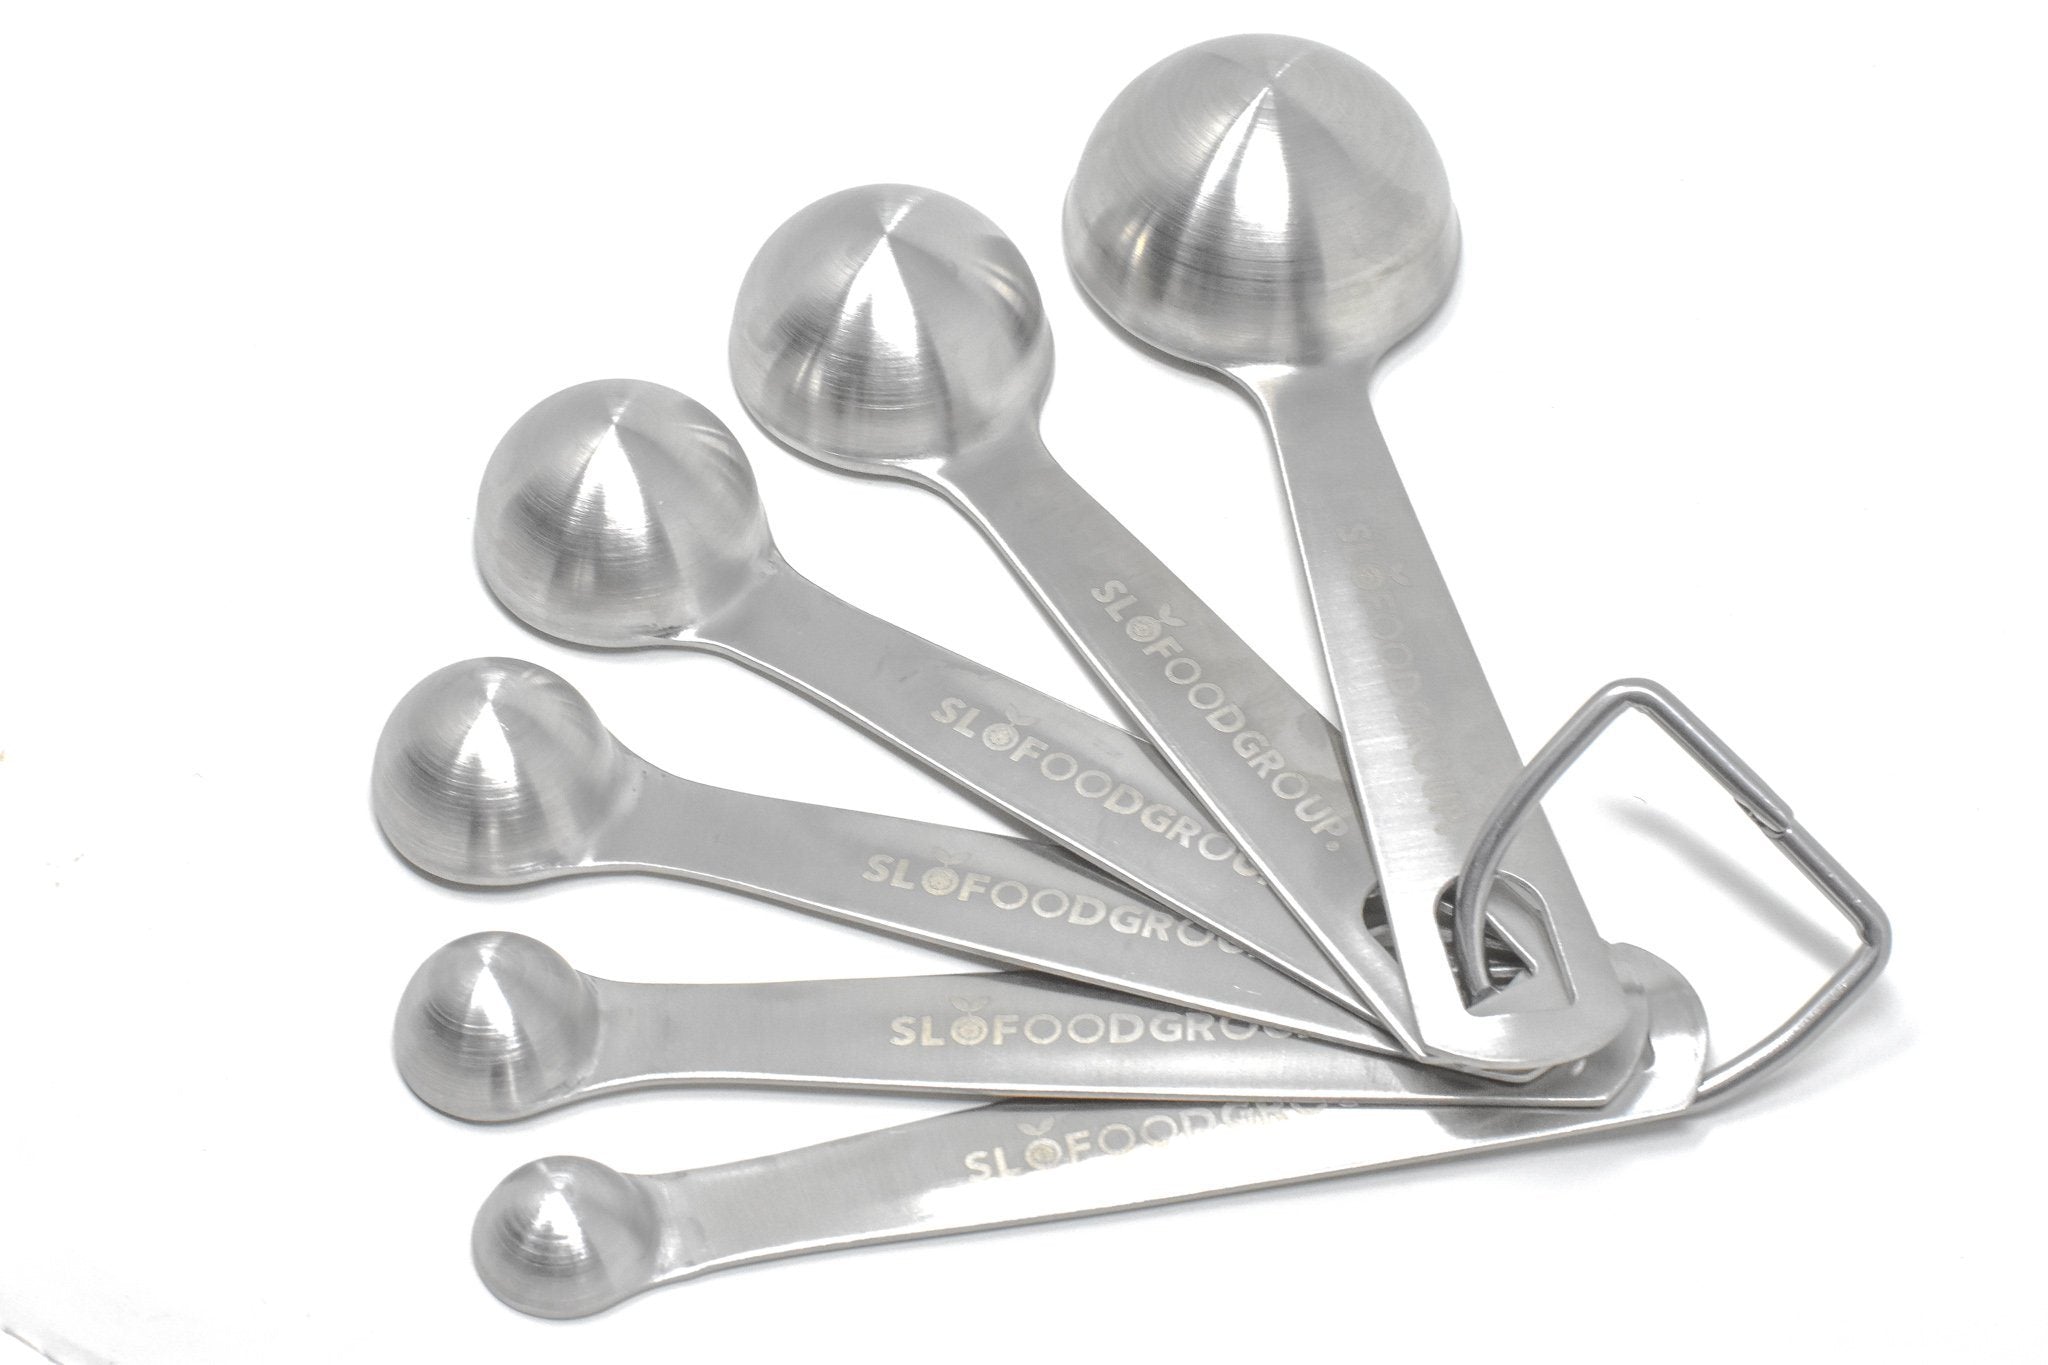 6 pcs Stainless Steel Measuring Spoons Set Teaspoon&Tablespoon